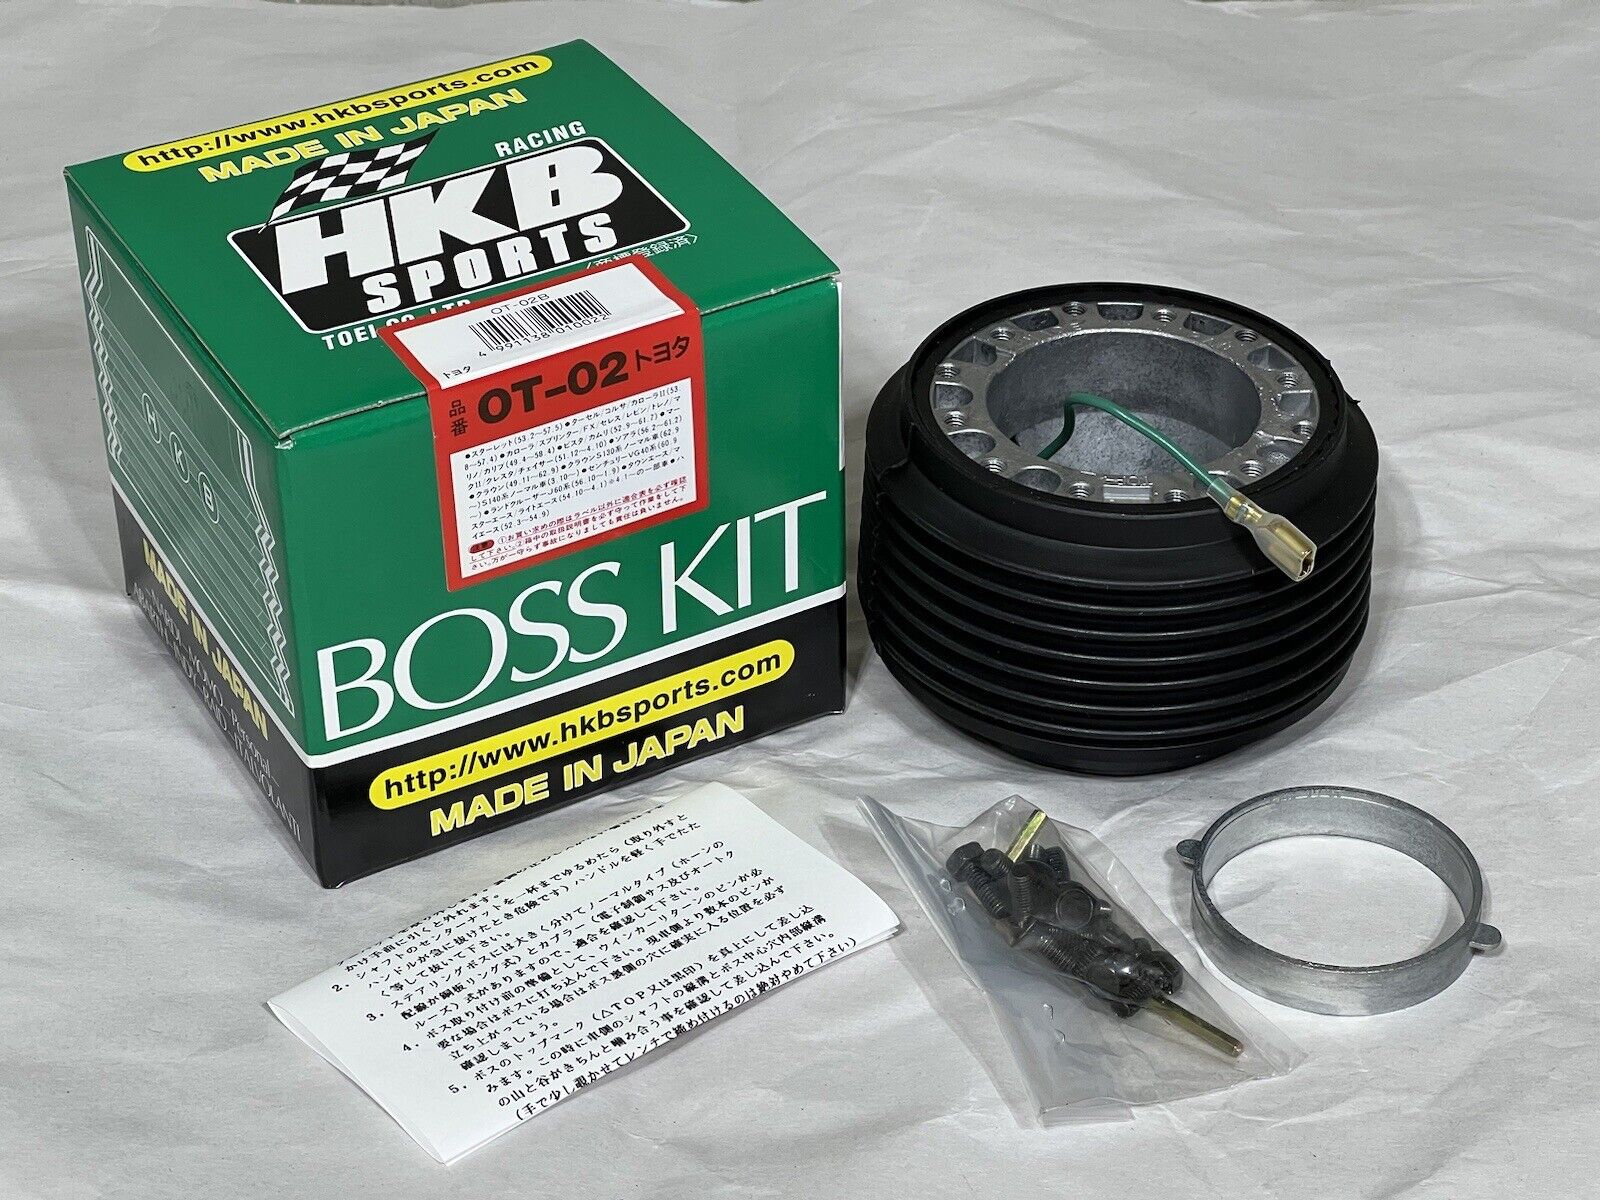 HKB SPORTS Steering Wheel Adapter Kit Boss Kit 81-85 Toyota Soarer MZ12